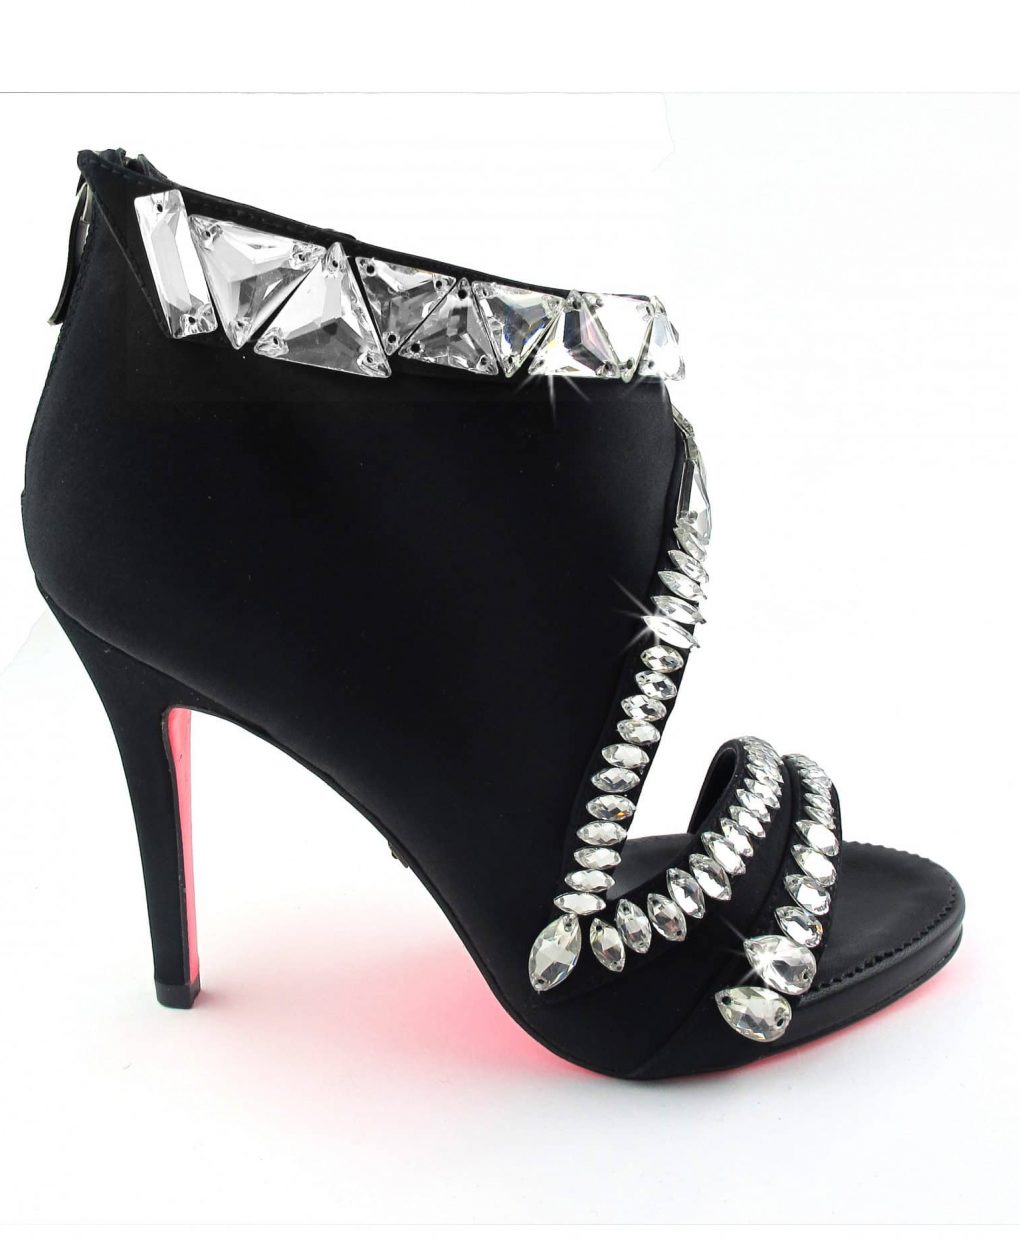 Alila Crystal Black Shoe Boot by Suecomma Bonnie